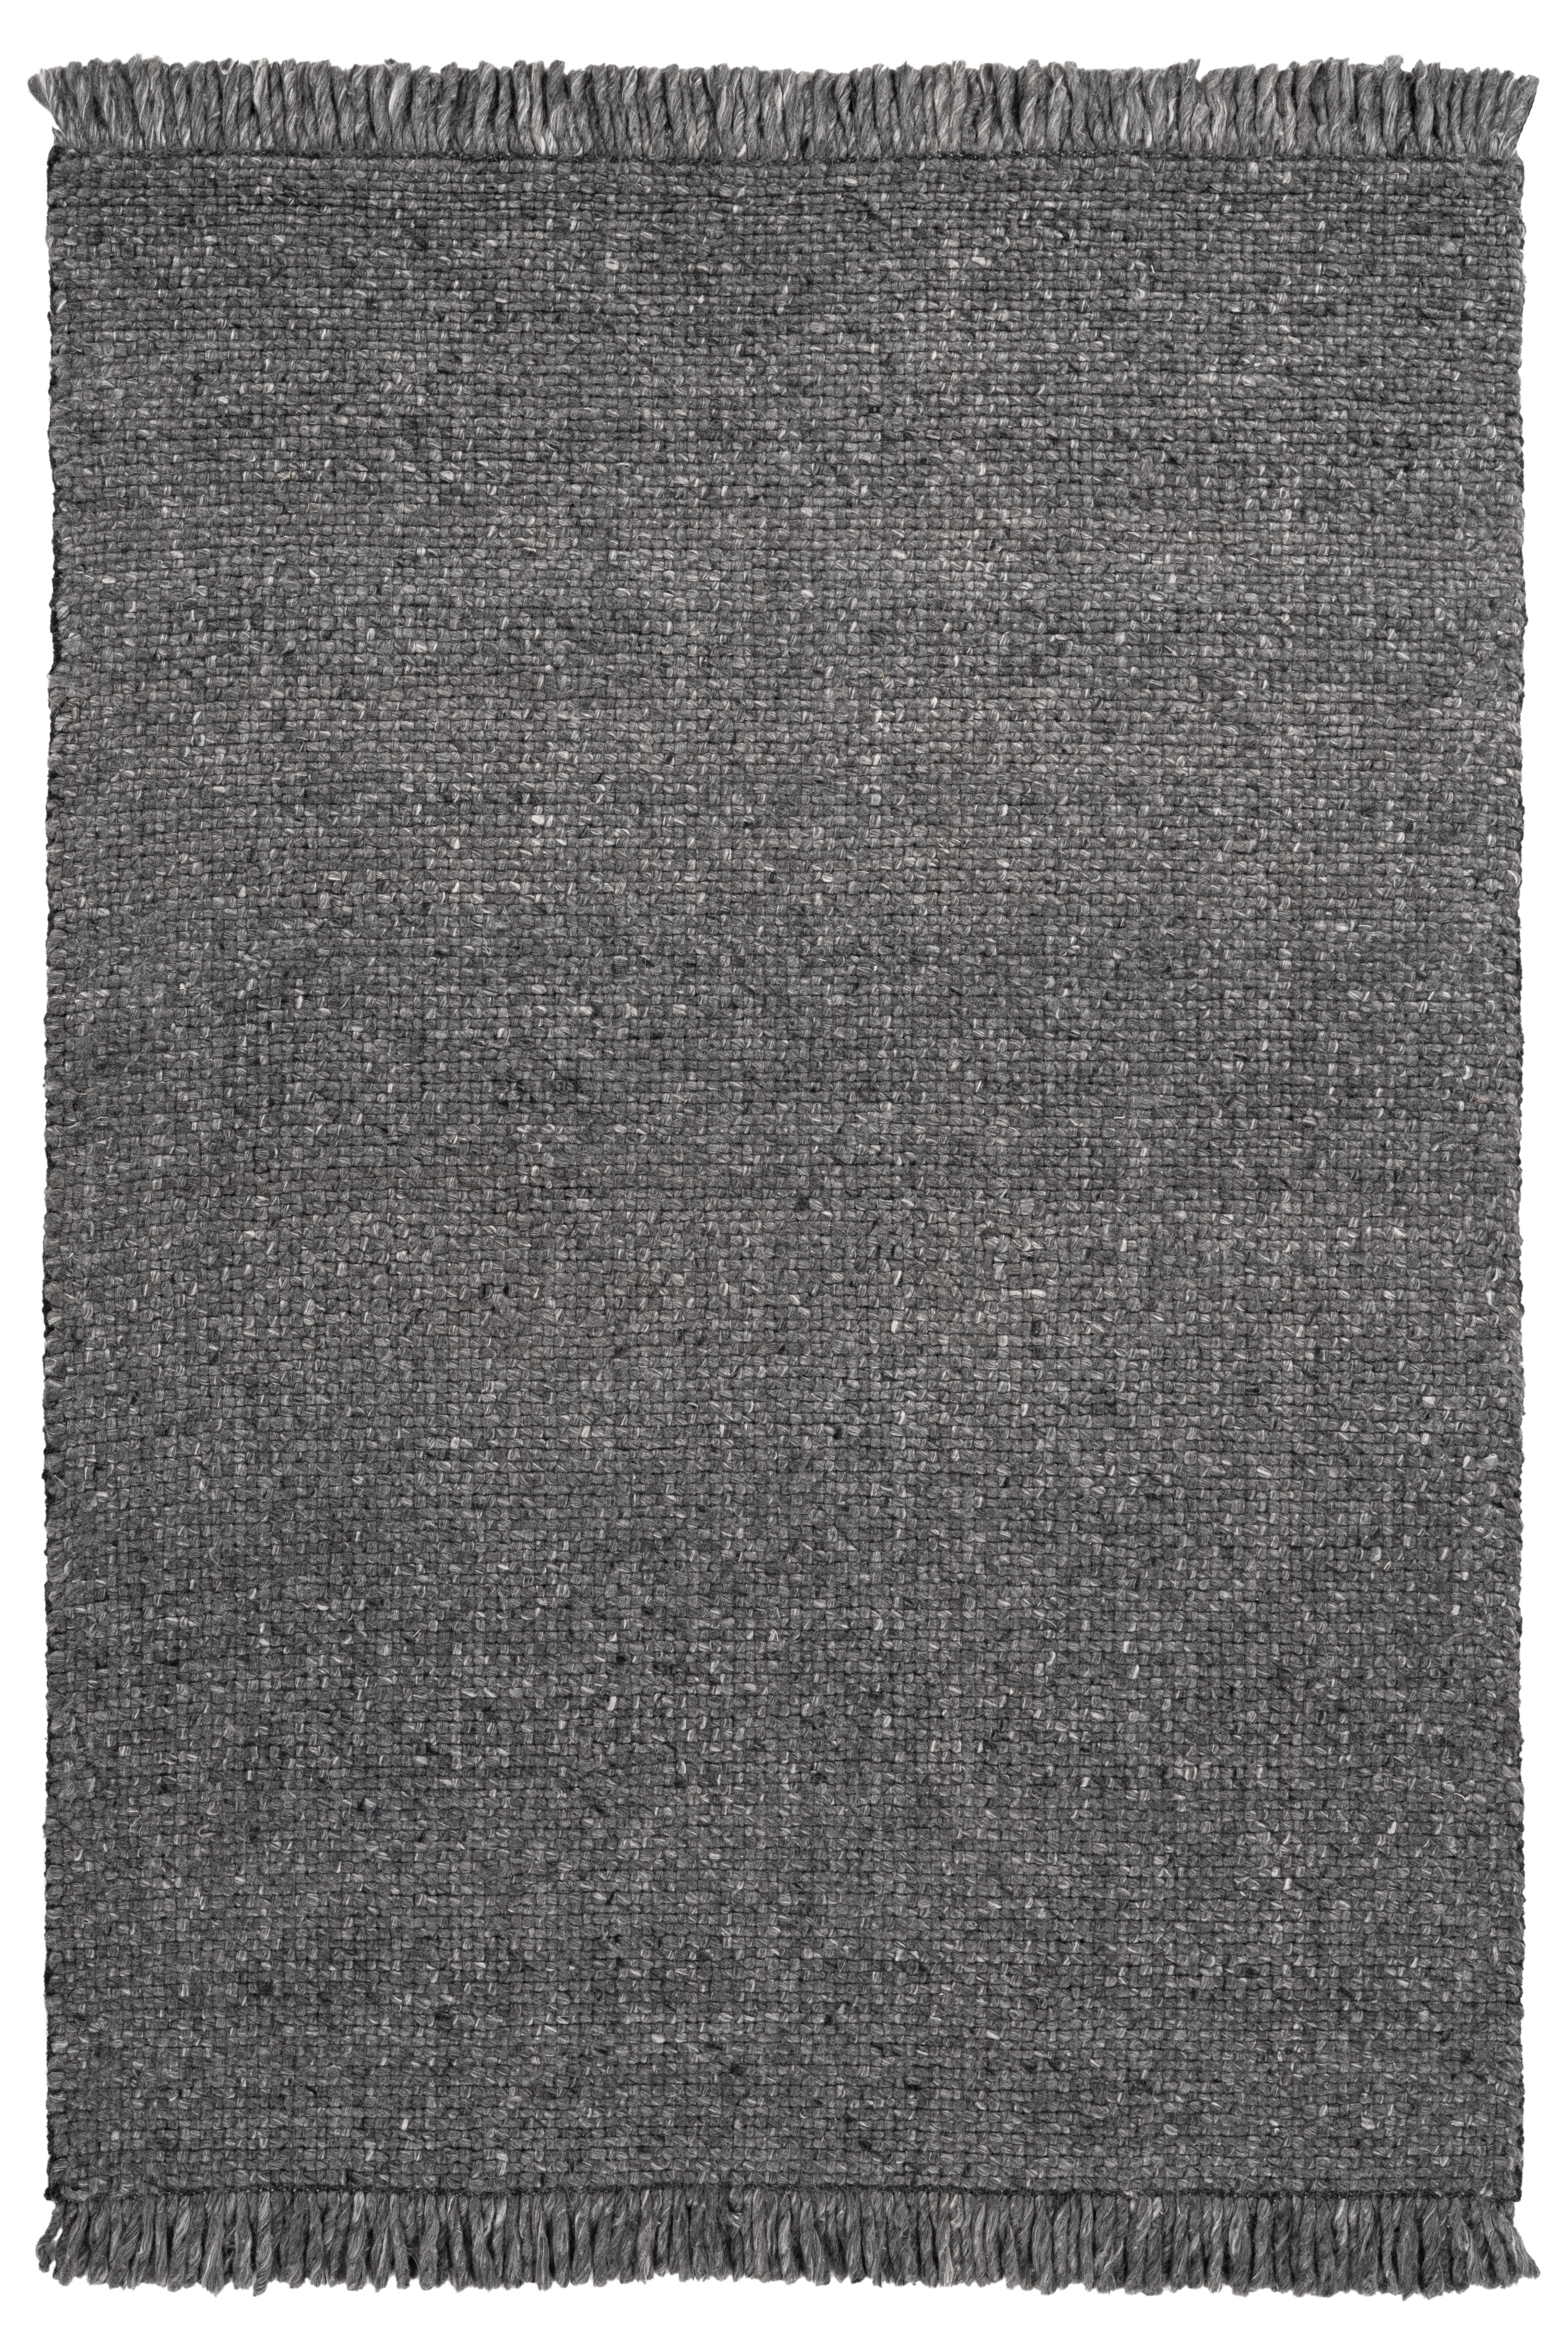 WEBTEPPICH 160/230 cm  - Anthrazit, Design, Textil (160/230cm) - Linea Natura